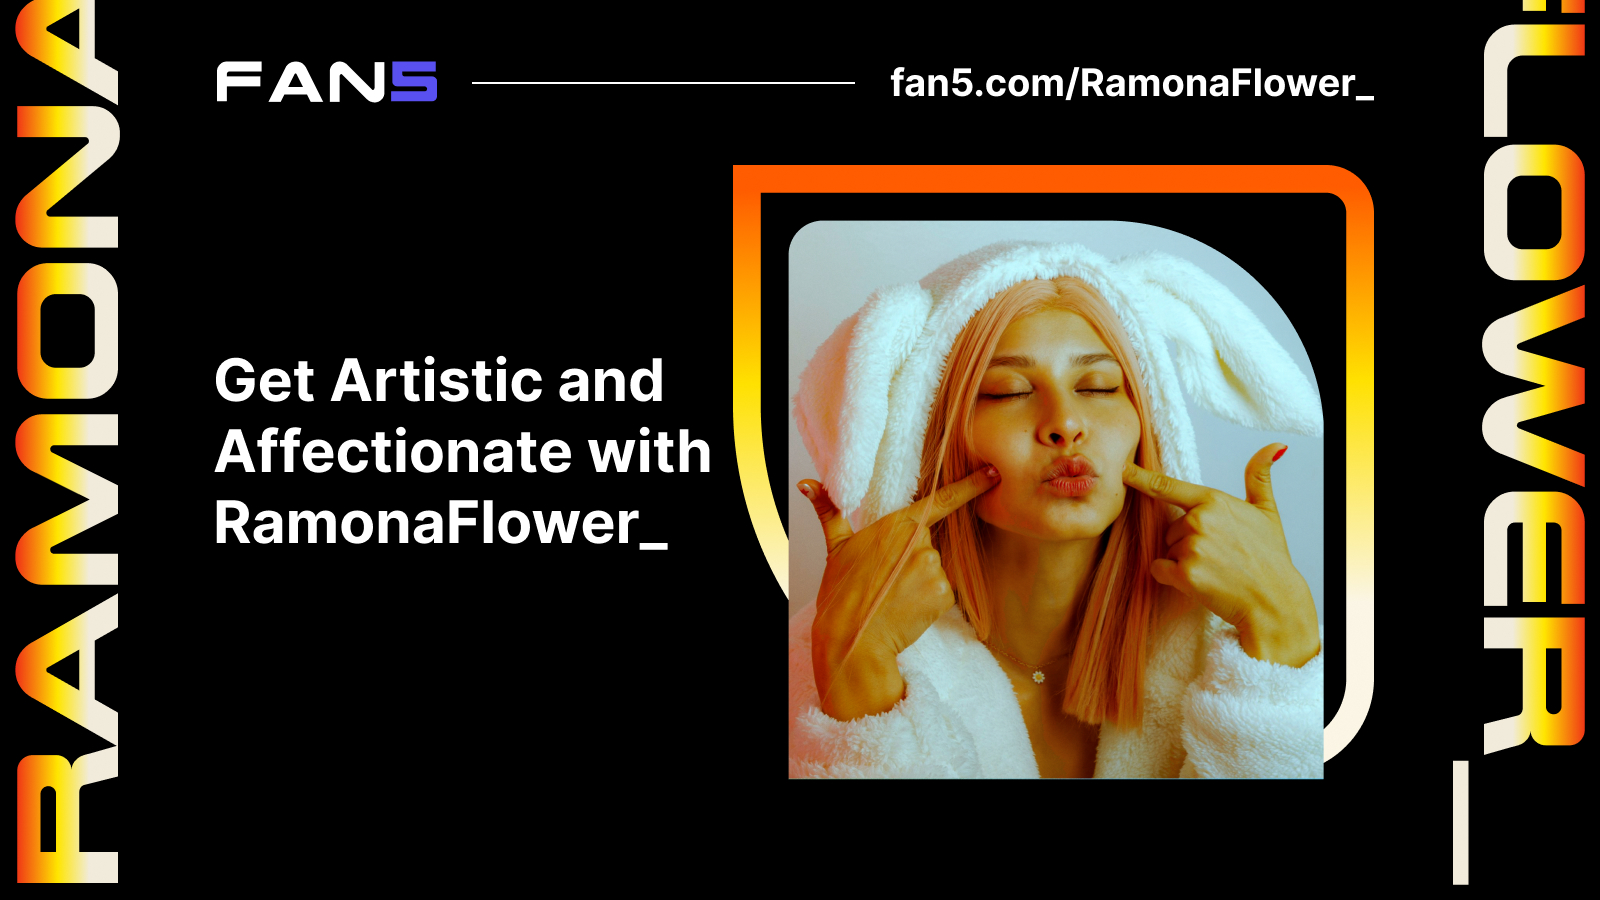 Ramona Flower: Creating a World of Artistic Eroticism